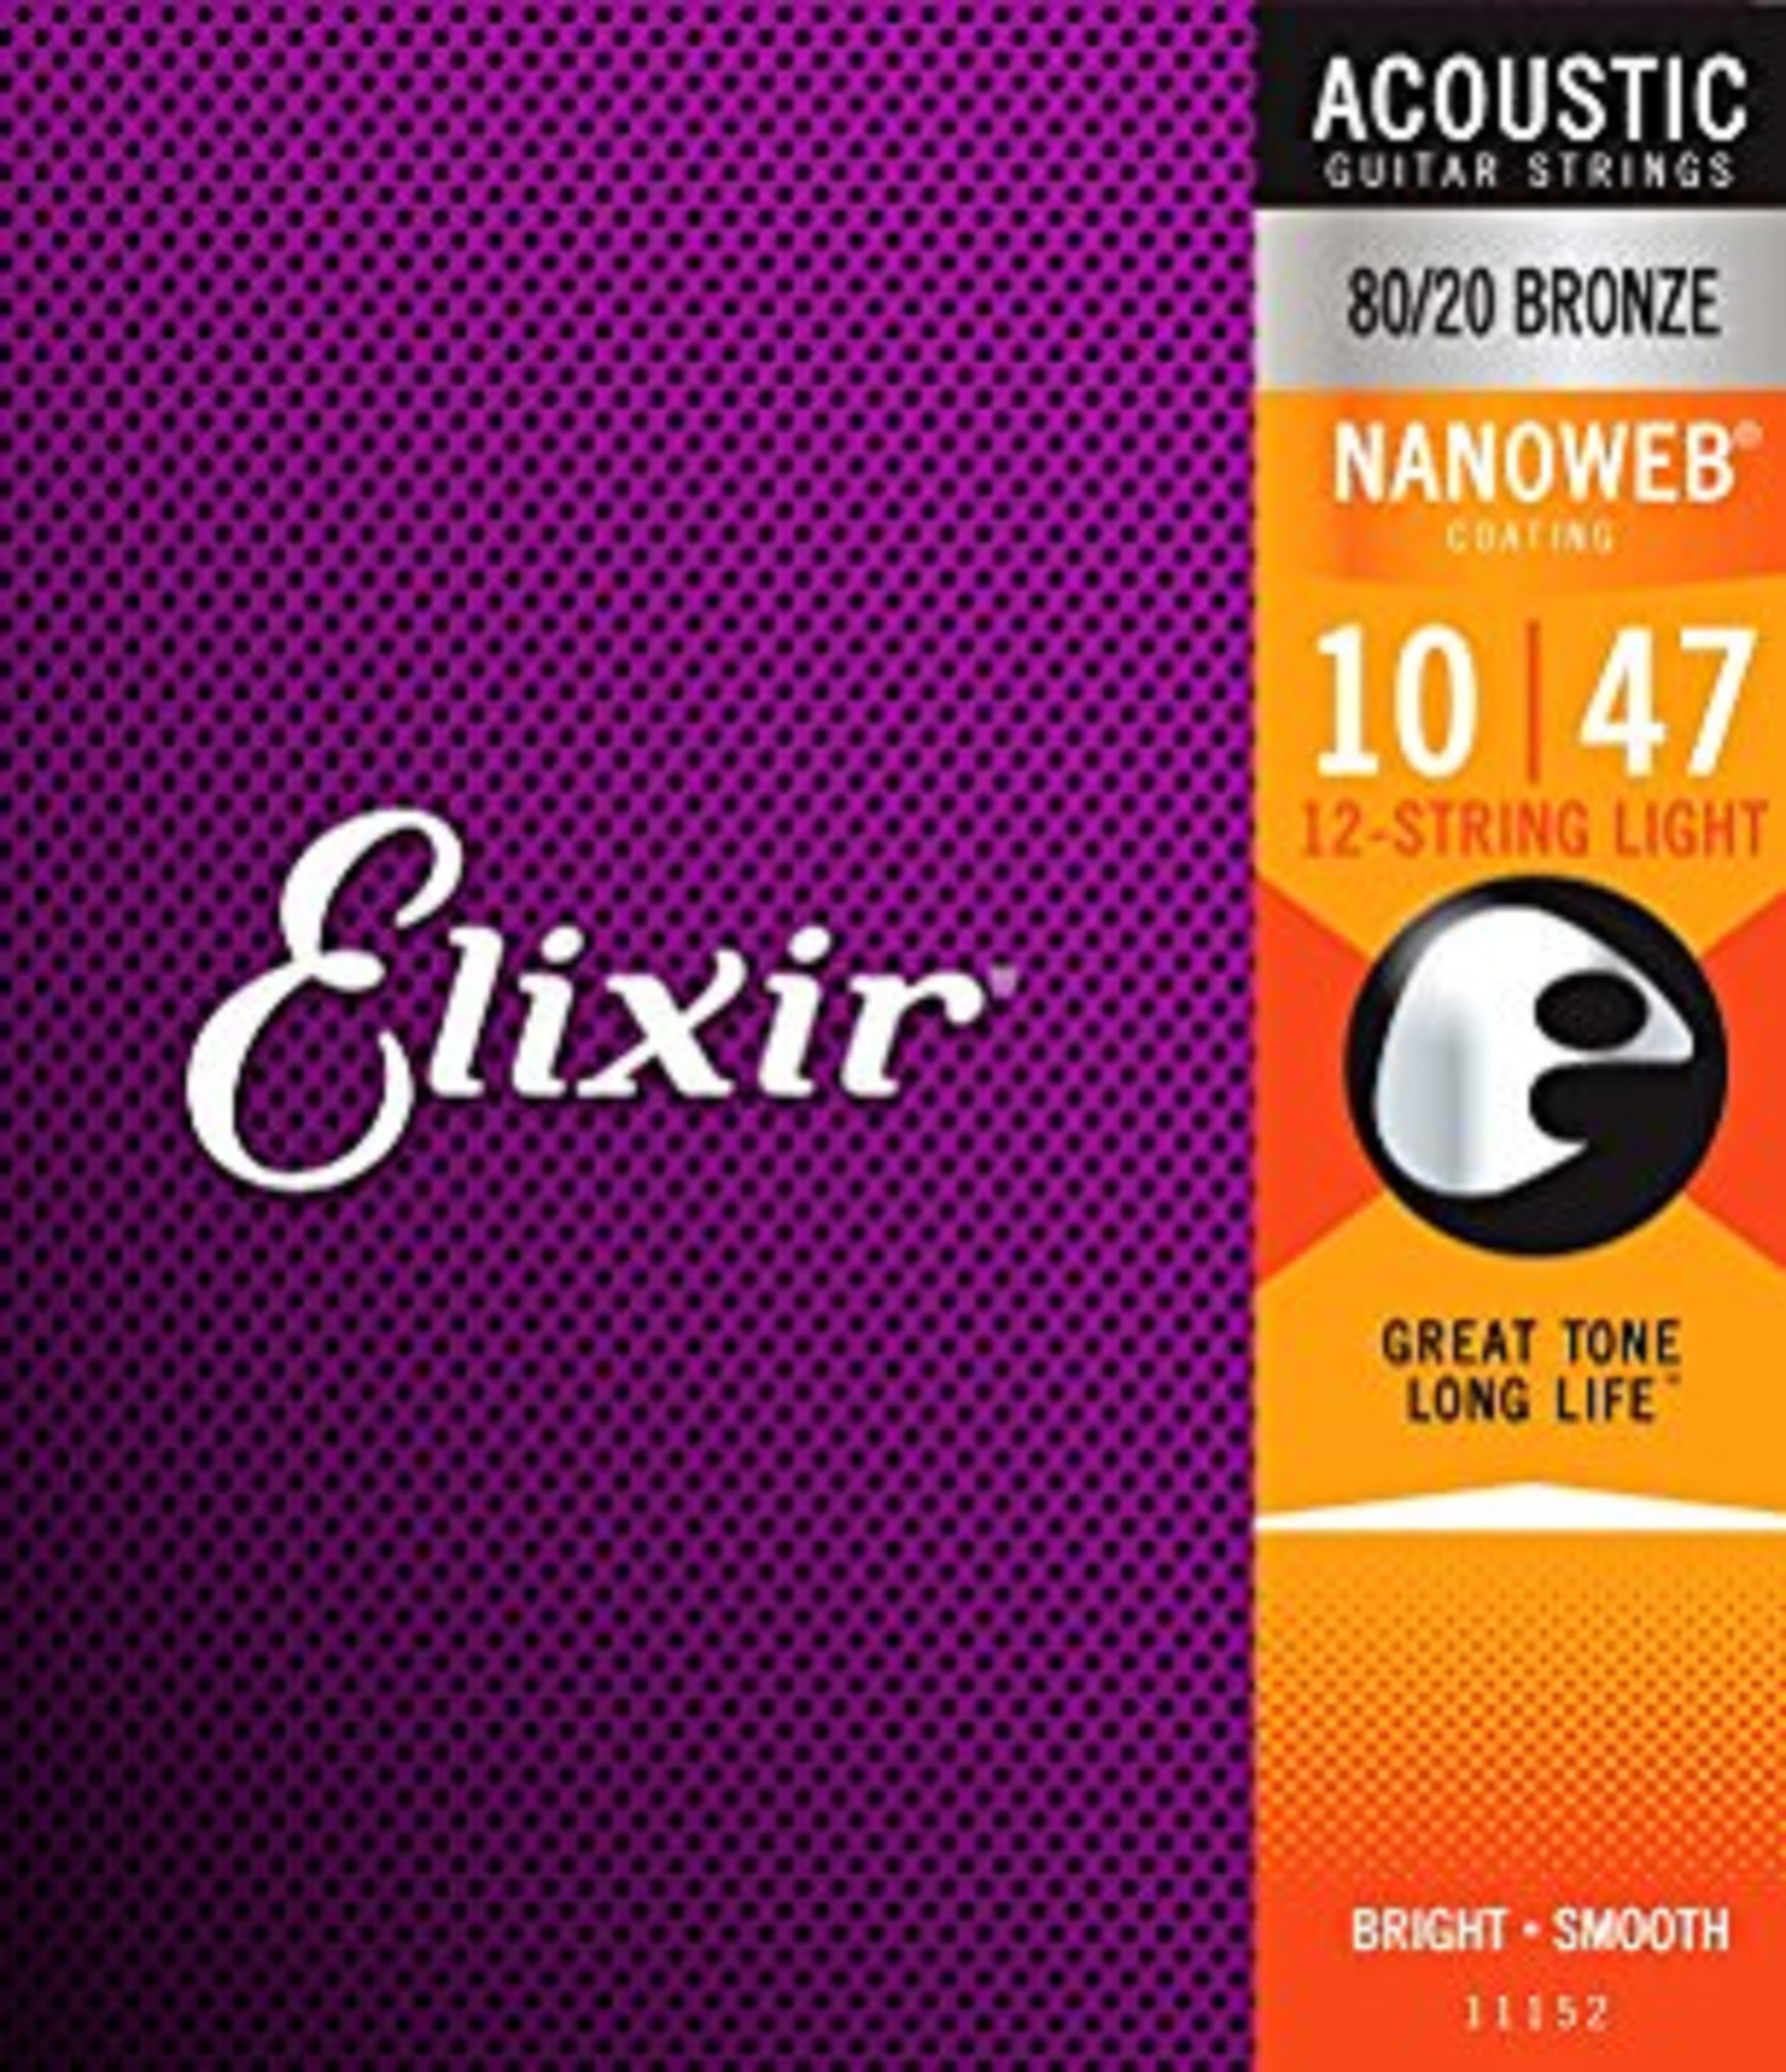 Elixir 11152 Nanoweb Light 80/20 12-String 010-047